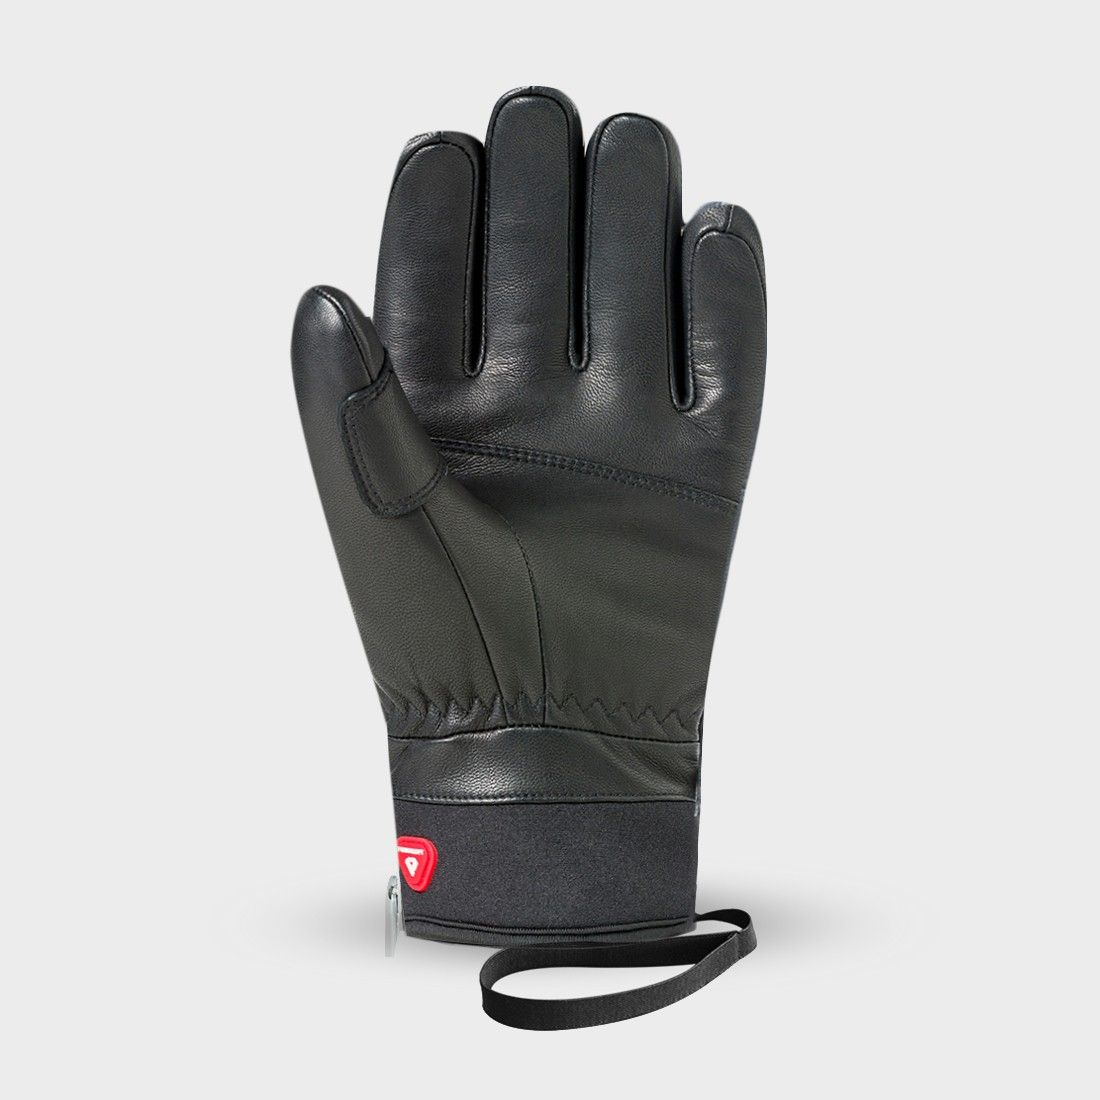 90 LEATHER - Ski Gloves